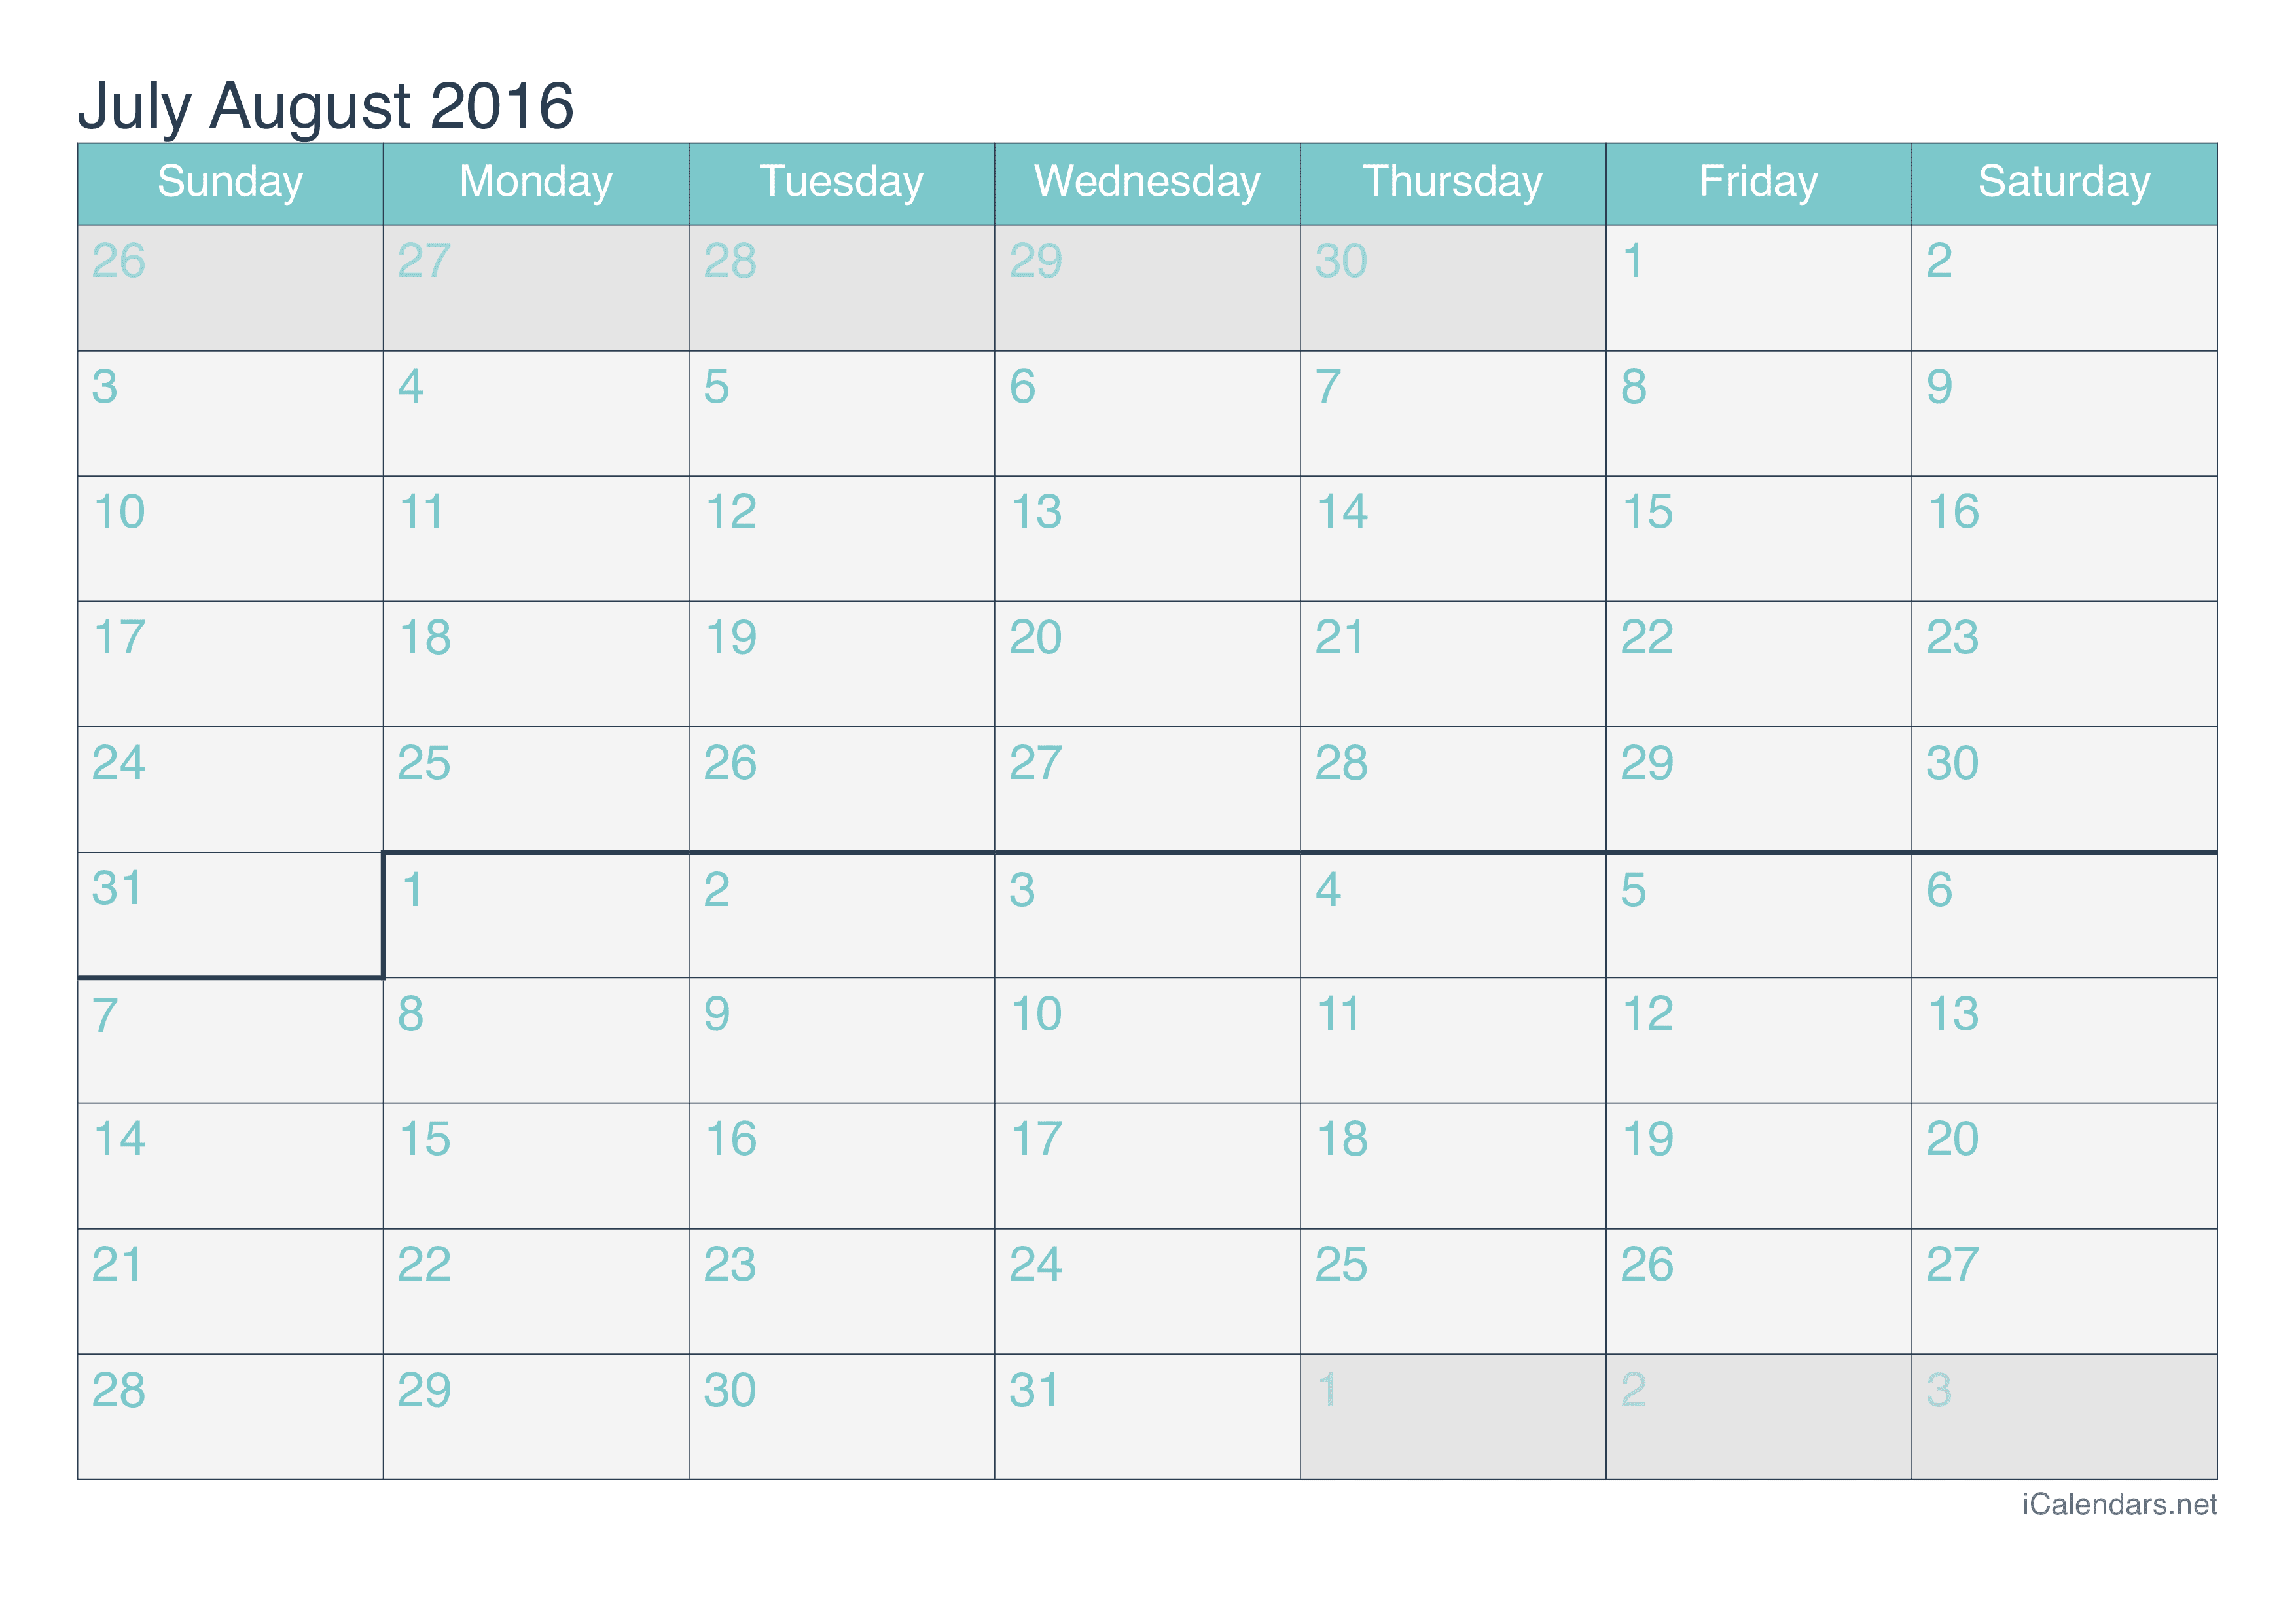 July and August 2016 Printable Calendar icalendars net